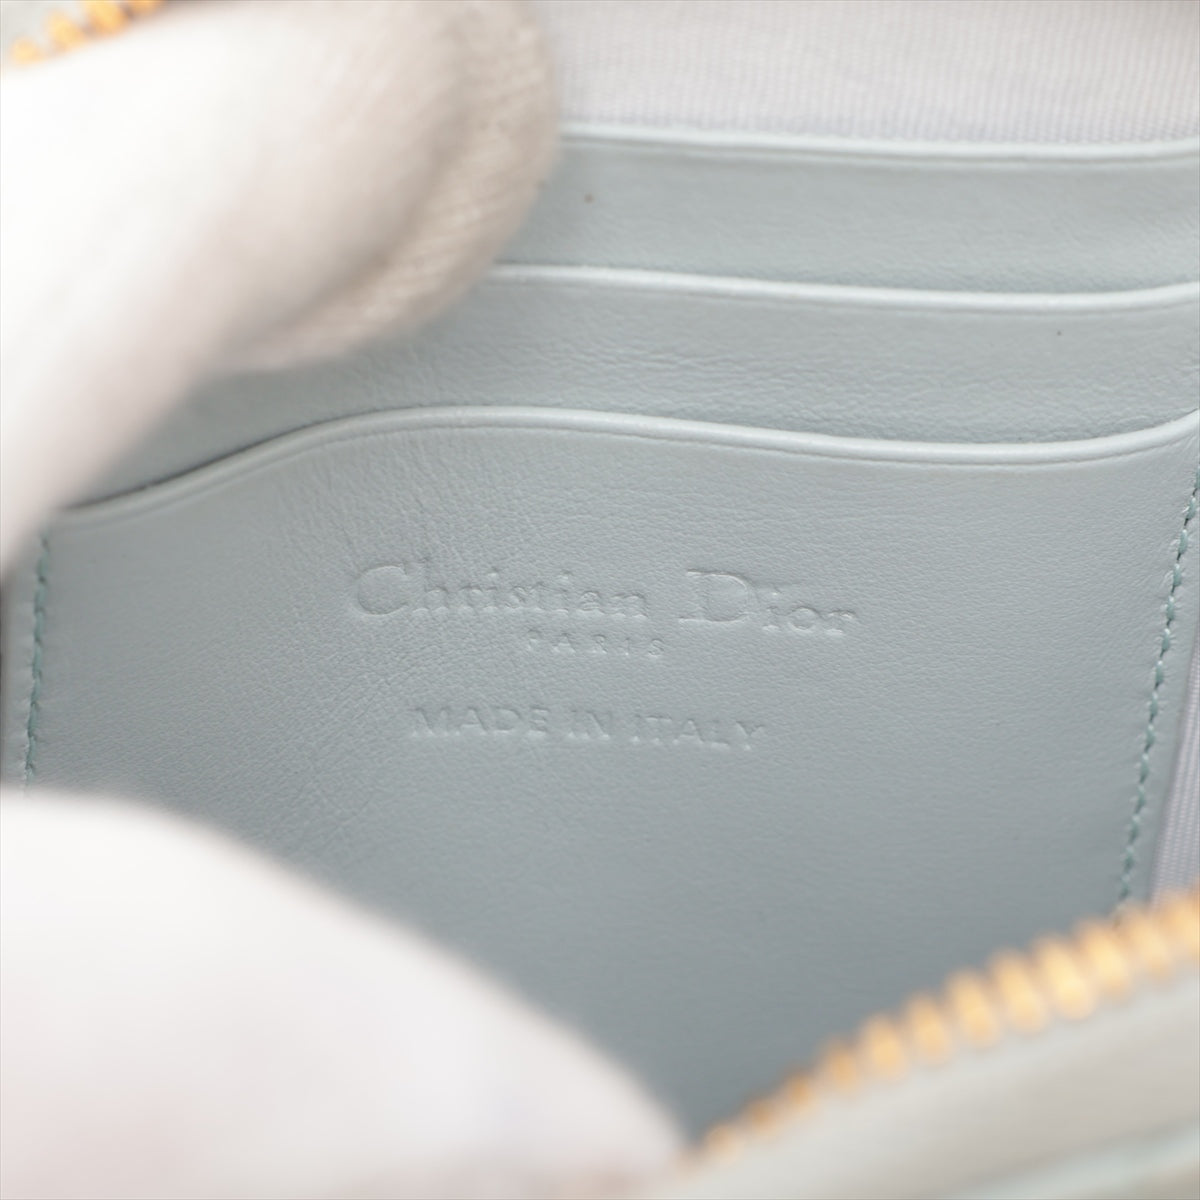 Christian Dior Canaridge Foundhalter Patent Leather Chain Shoulder Bag Blue